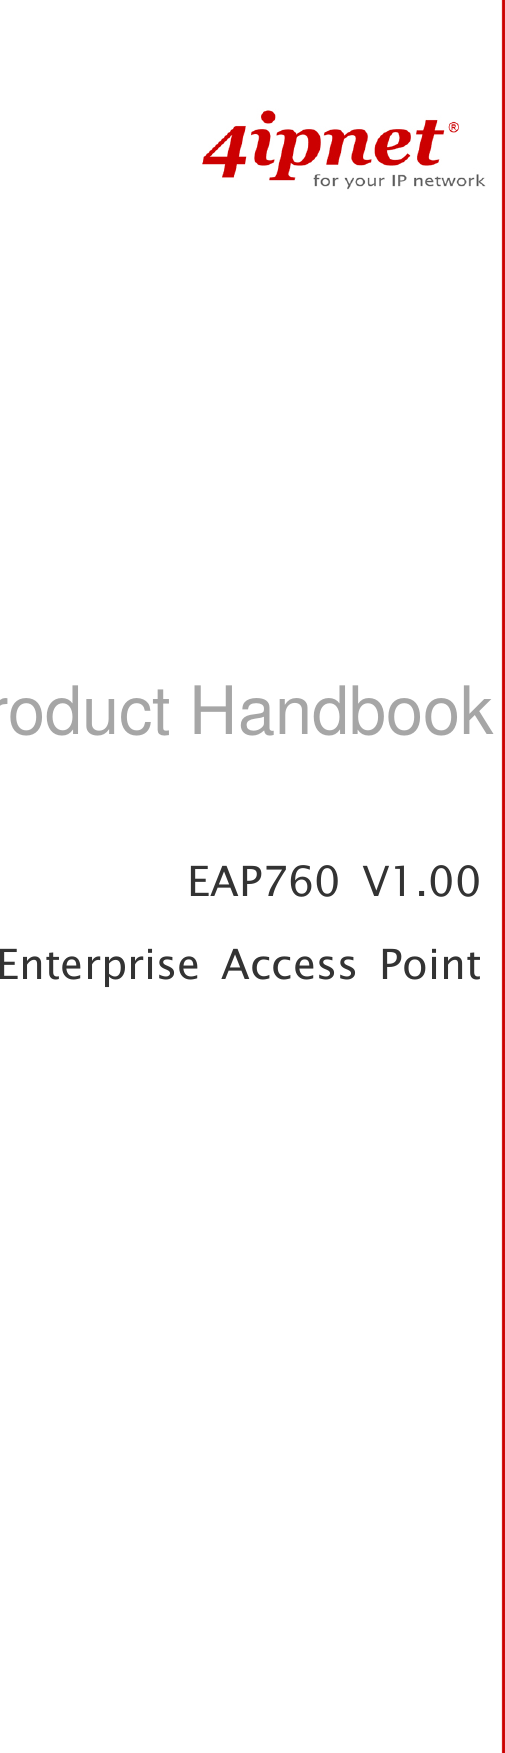    EAP760  V1.00Enterprise  Access  PointProduct Handbook